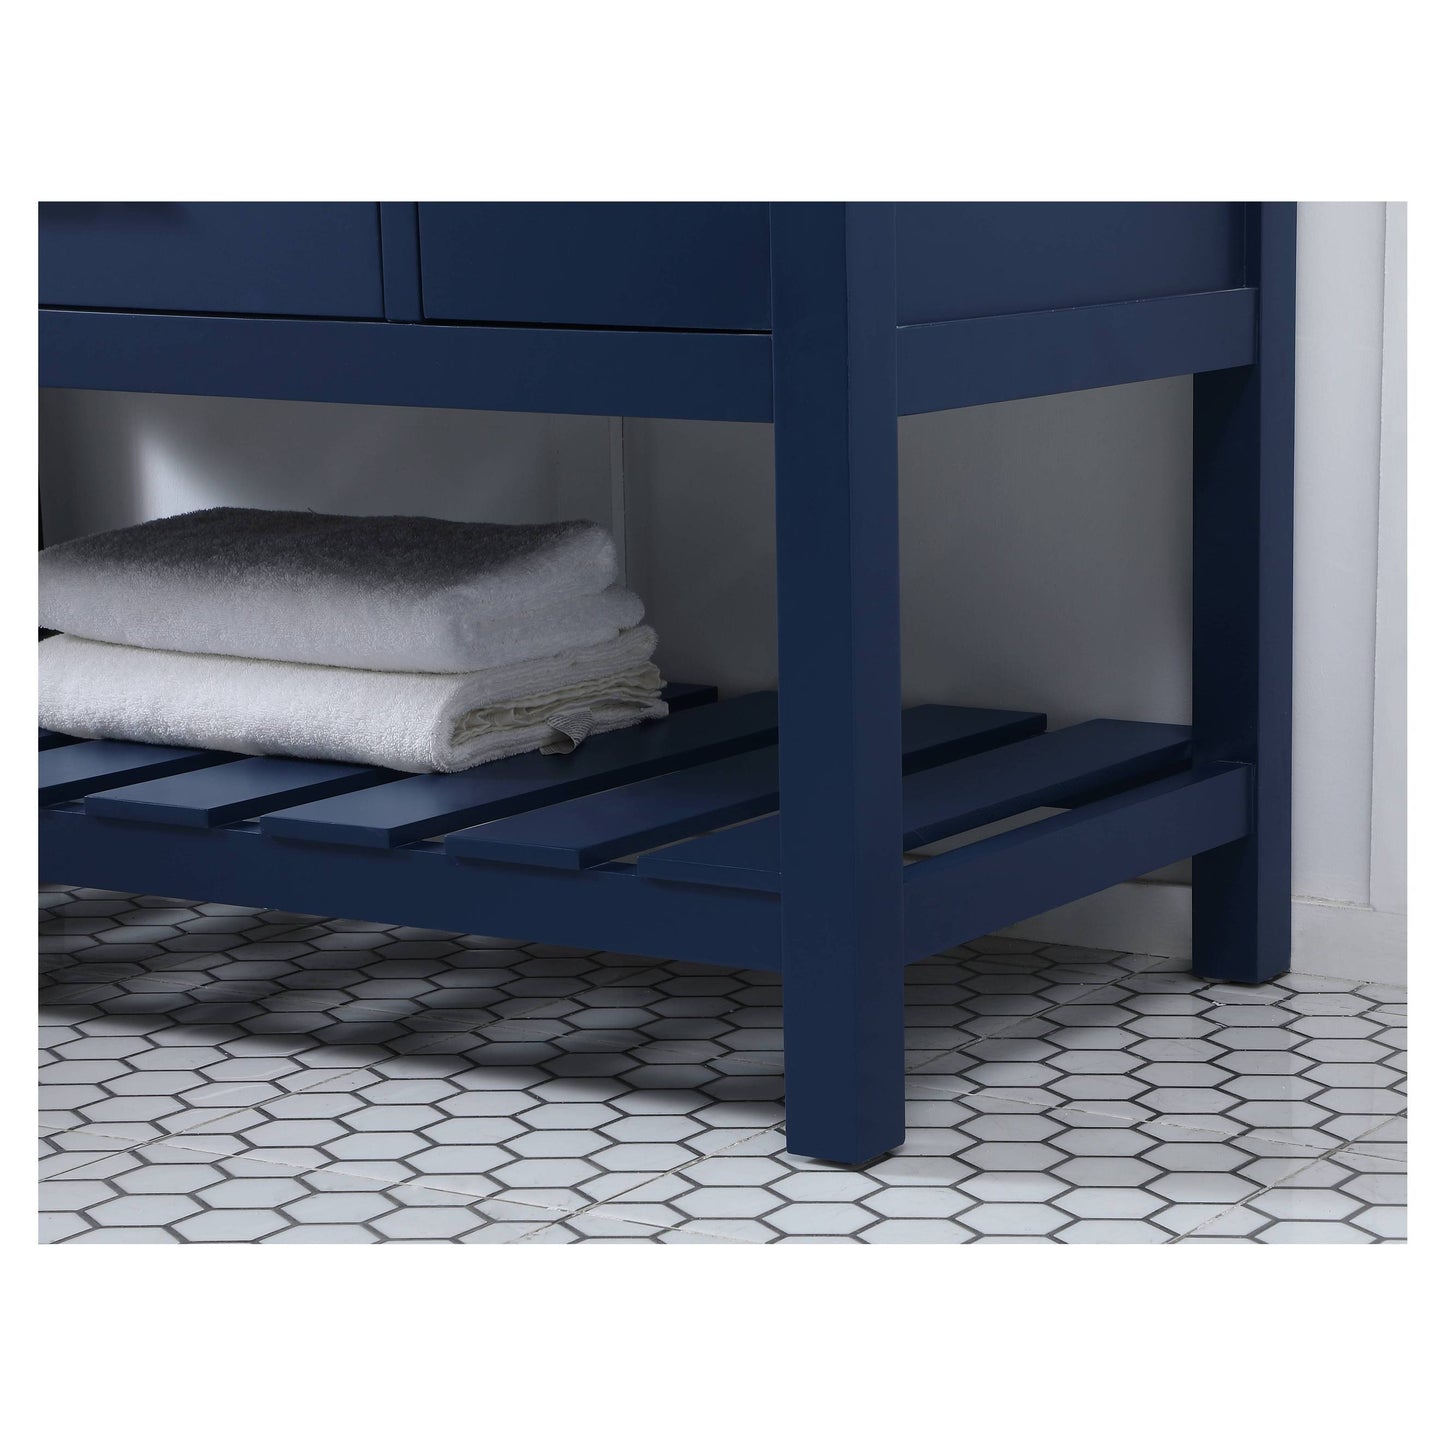 VF60148BL-BS 48" Single Bathroom Vanity in Blue With Backsplash